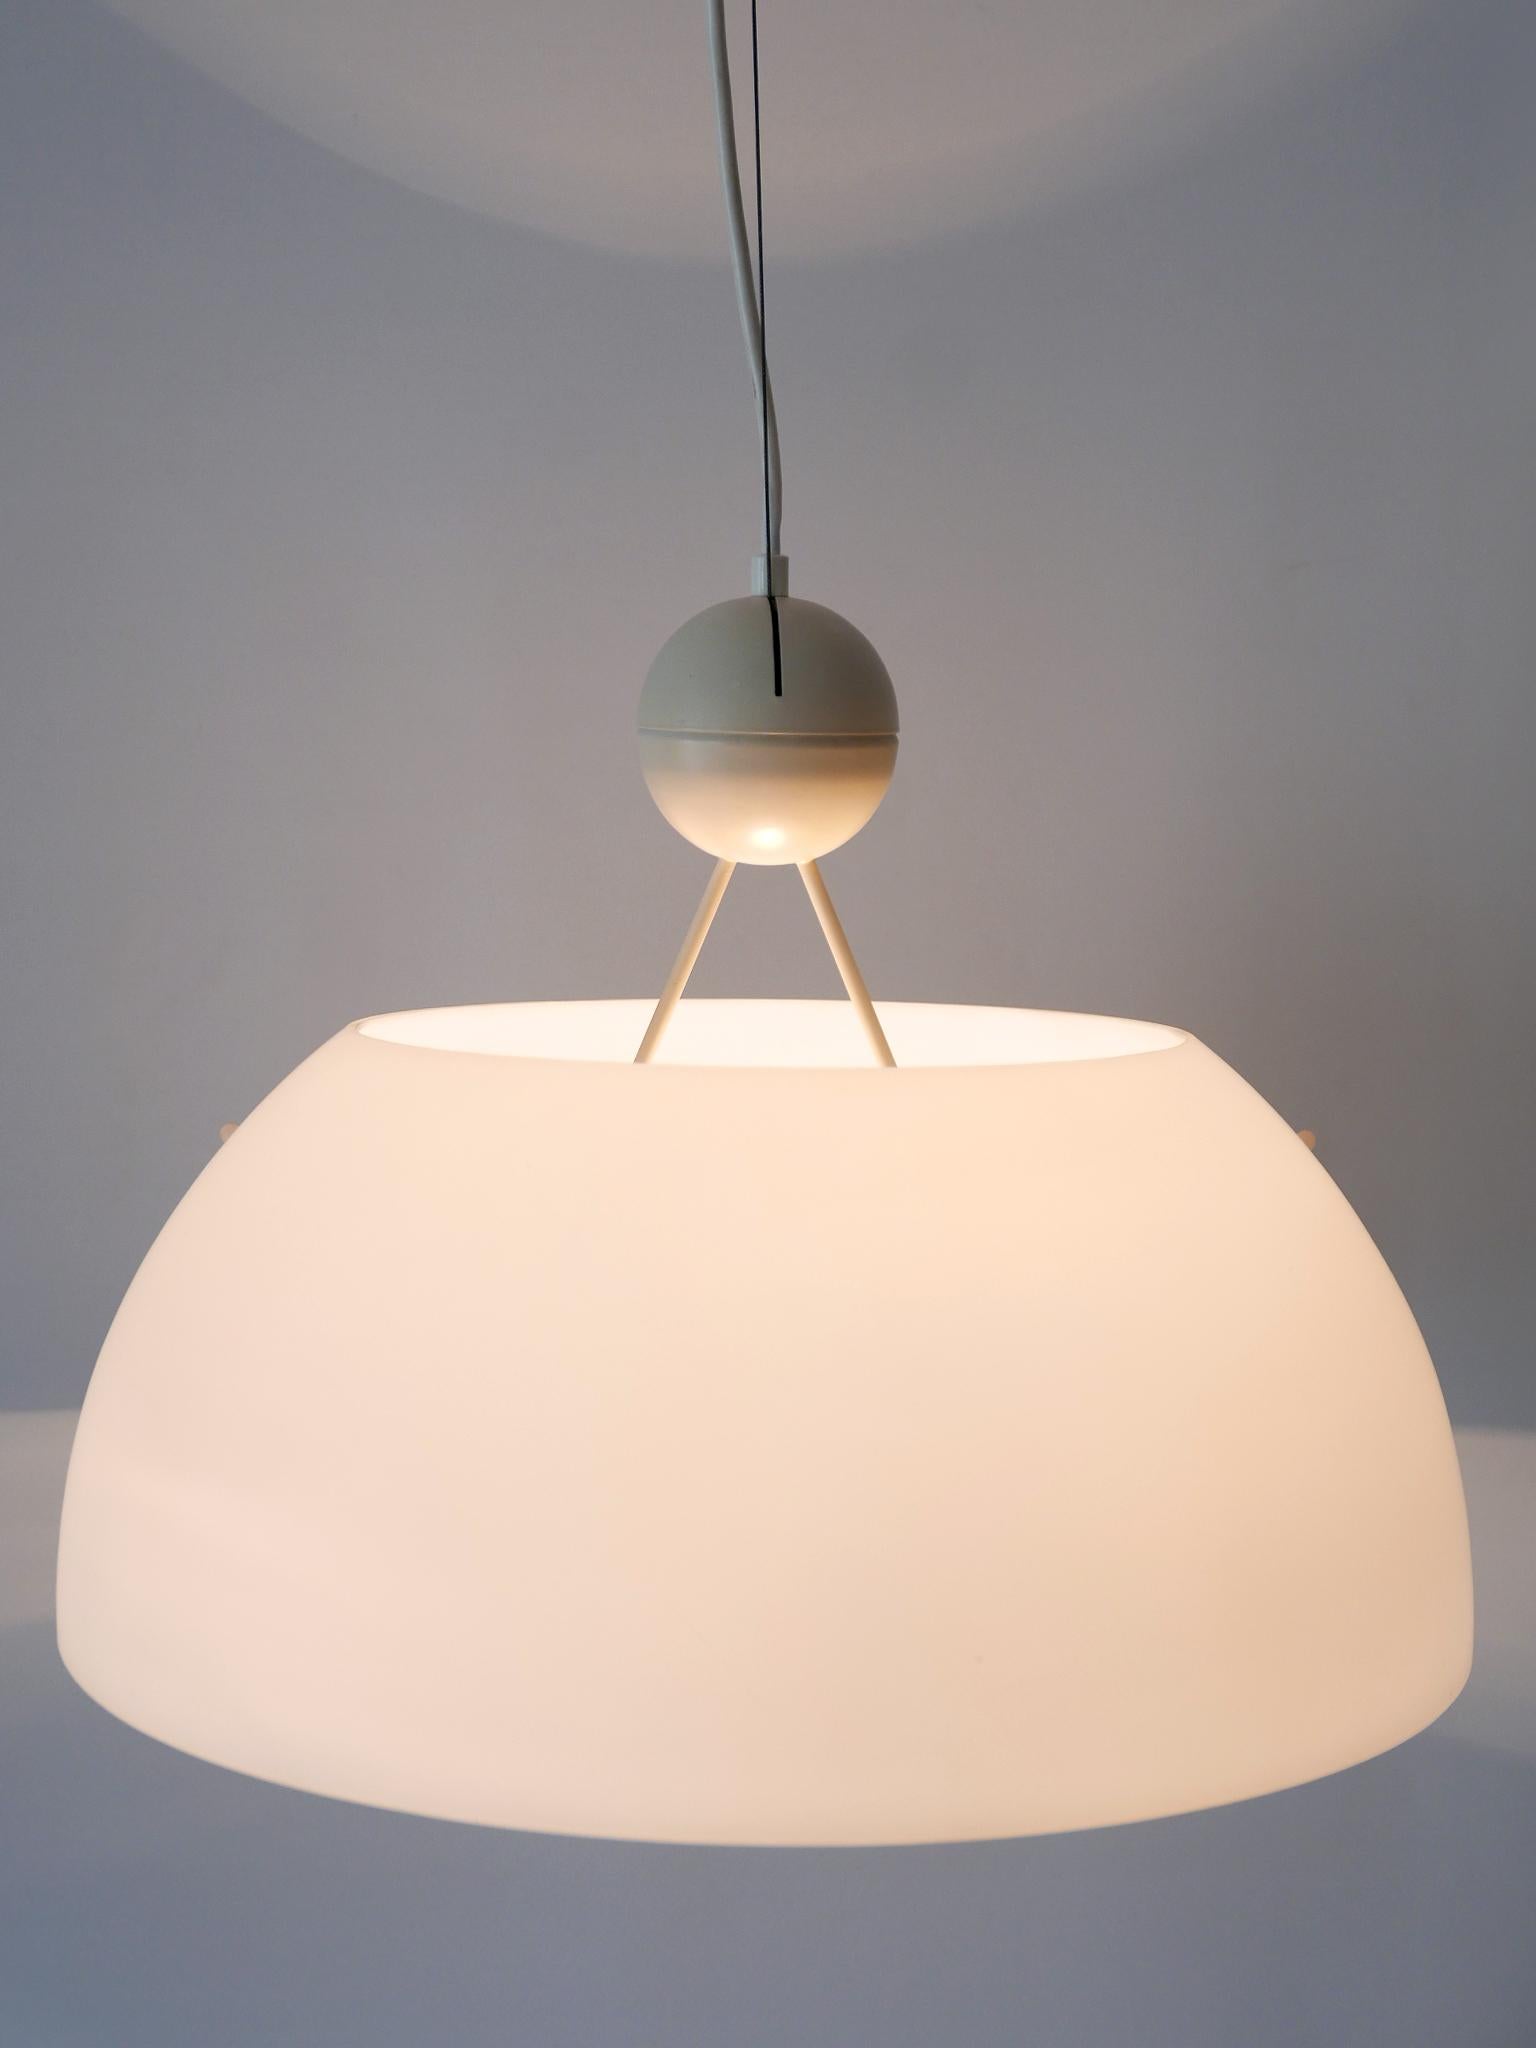 Rare & Elegant Mid-Century Modern Pendant Lamp or Hanging Light Italy 1970s For Sale 11